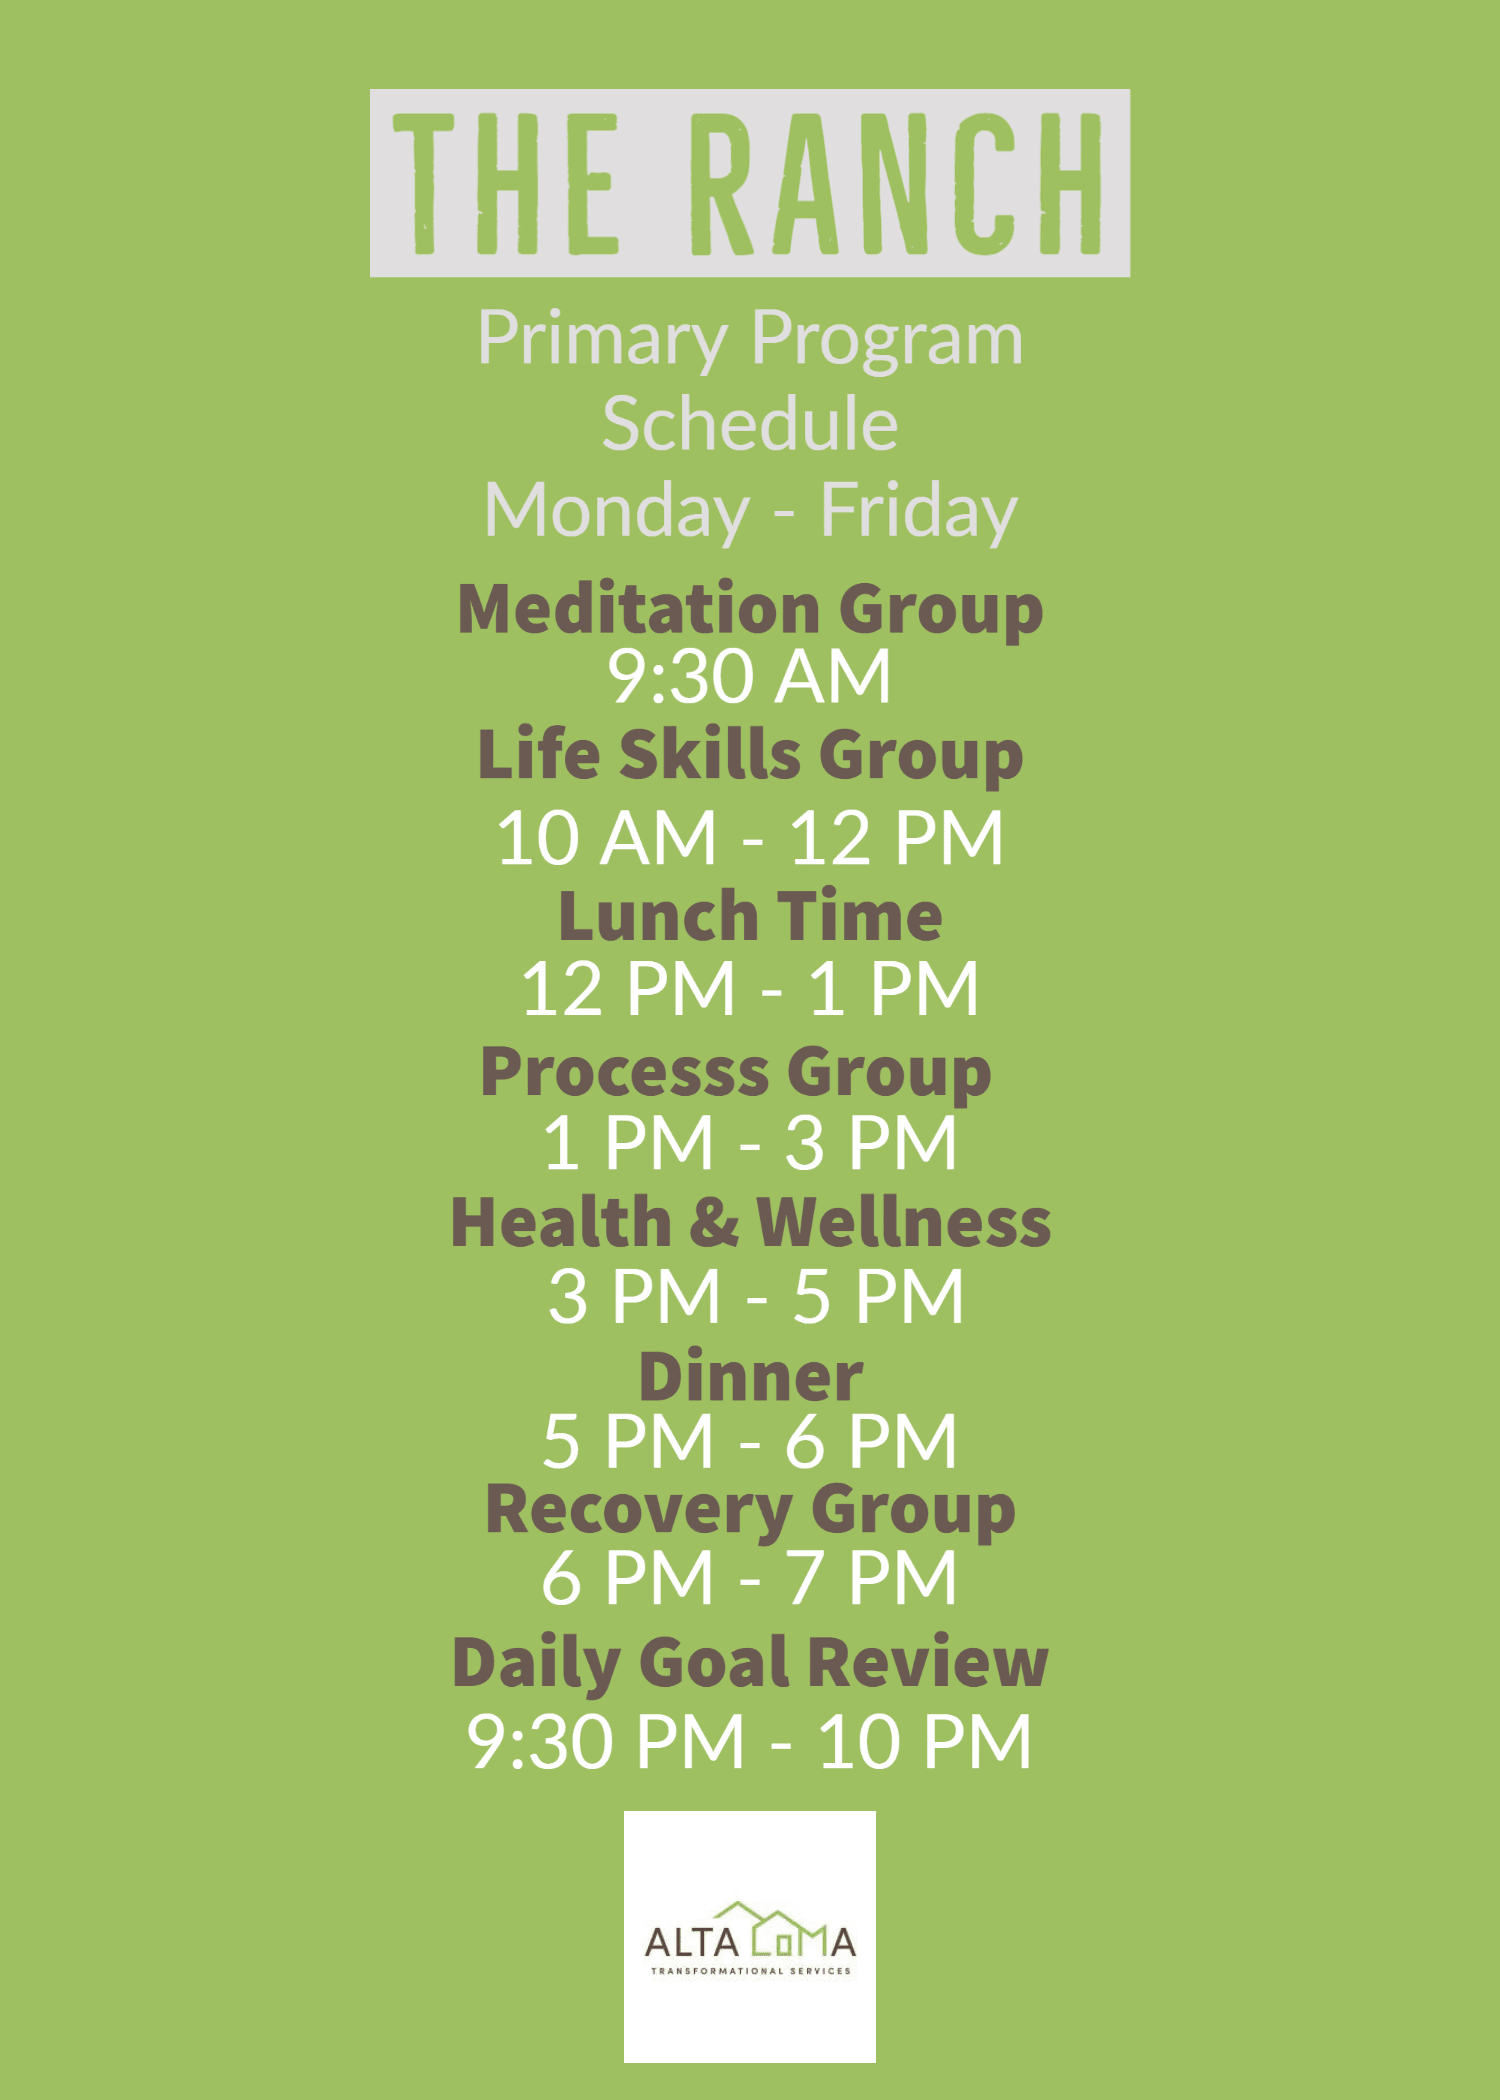 Alta Loma's Primary Program Schedule